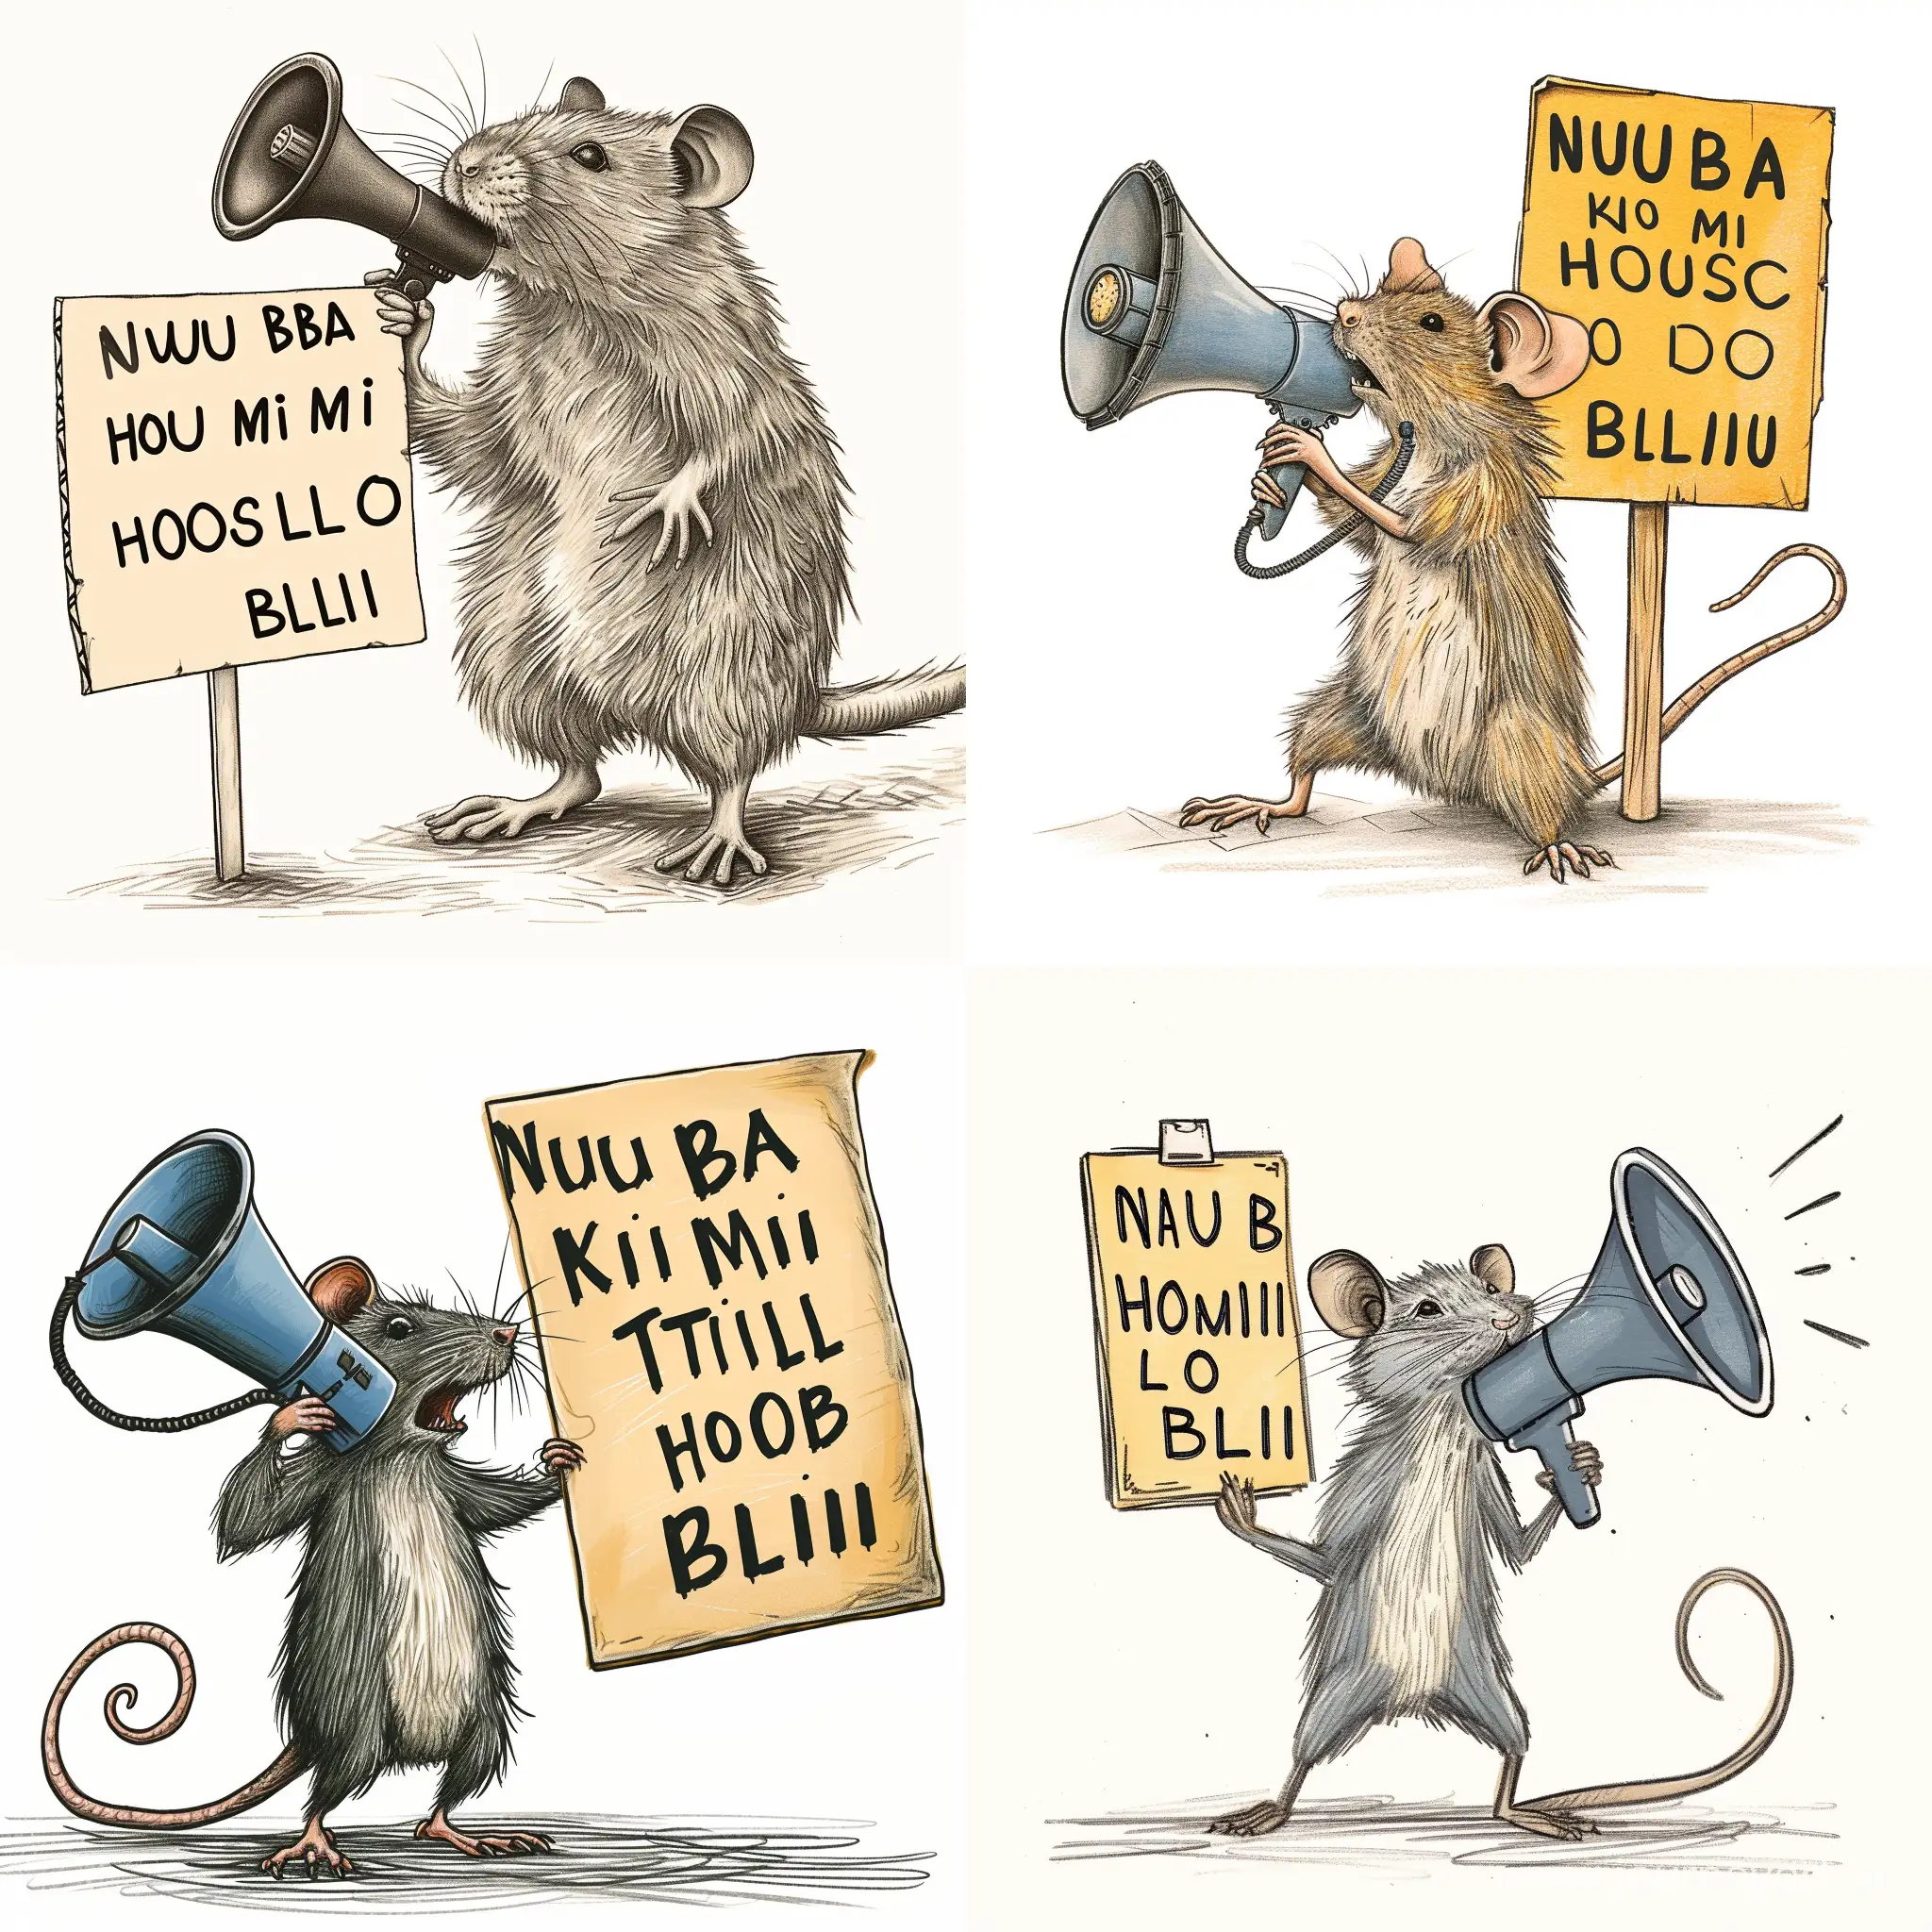 Rat holding megaphone and placard protesting sketch holding a card board on his hand write "NAU BA MI KM STILL LO HOUSE BLIU"